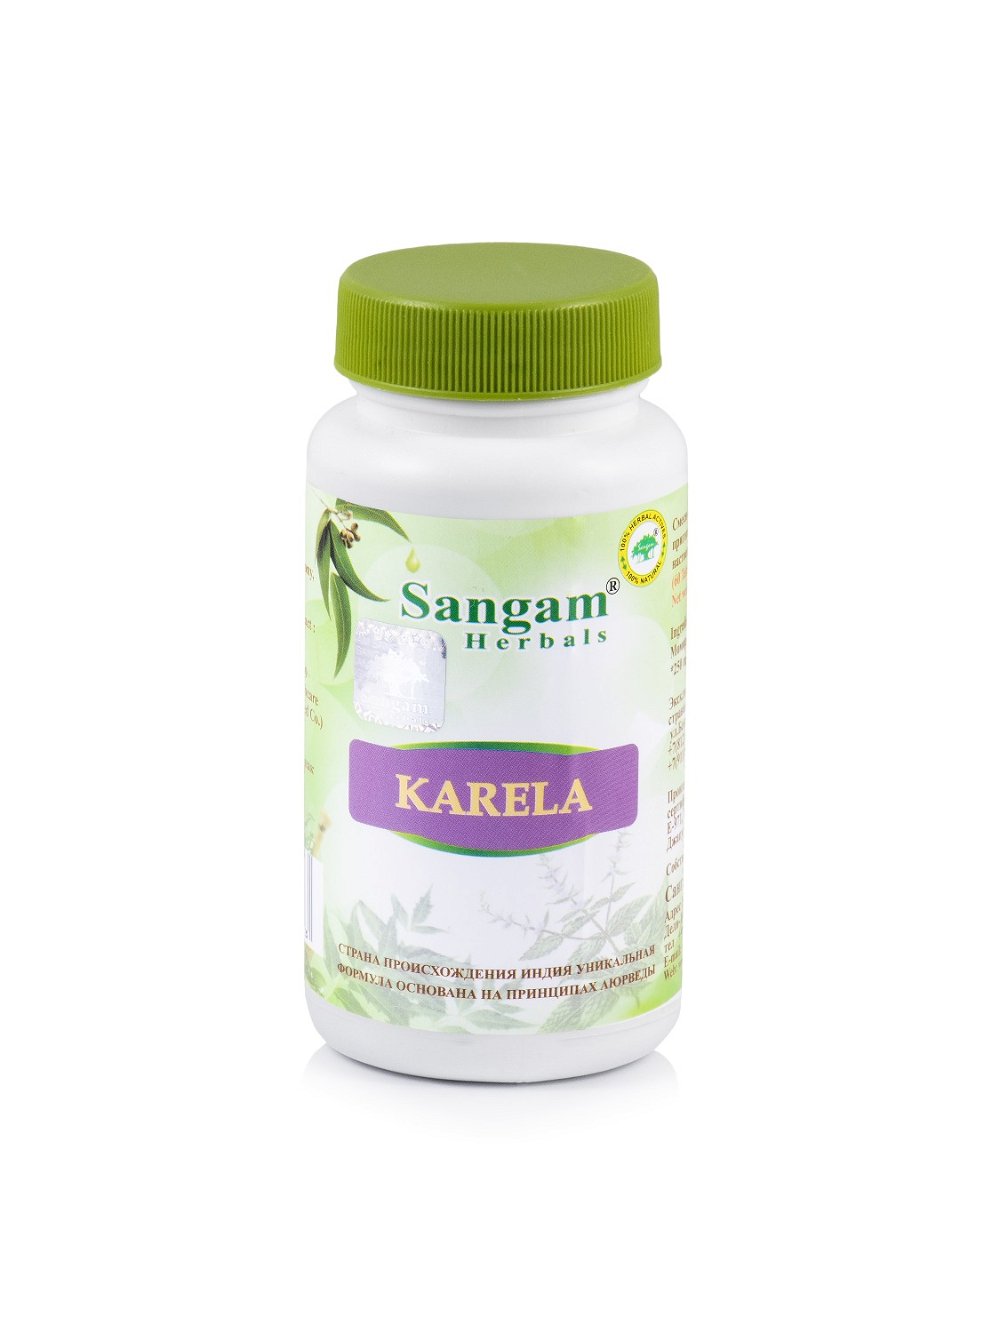 Карела Sangam Herbals (60 таблеток), 